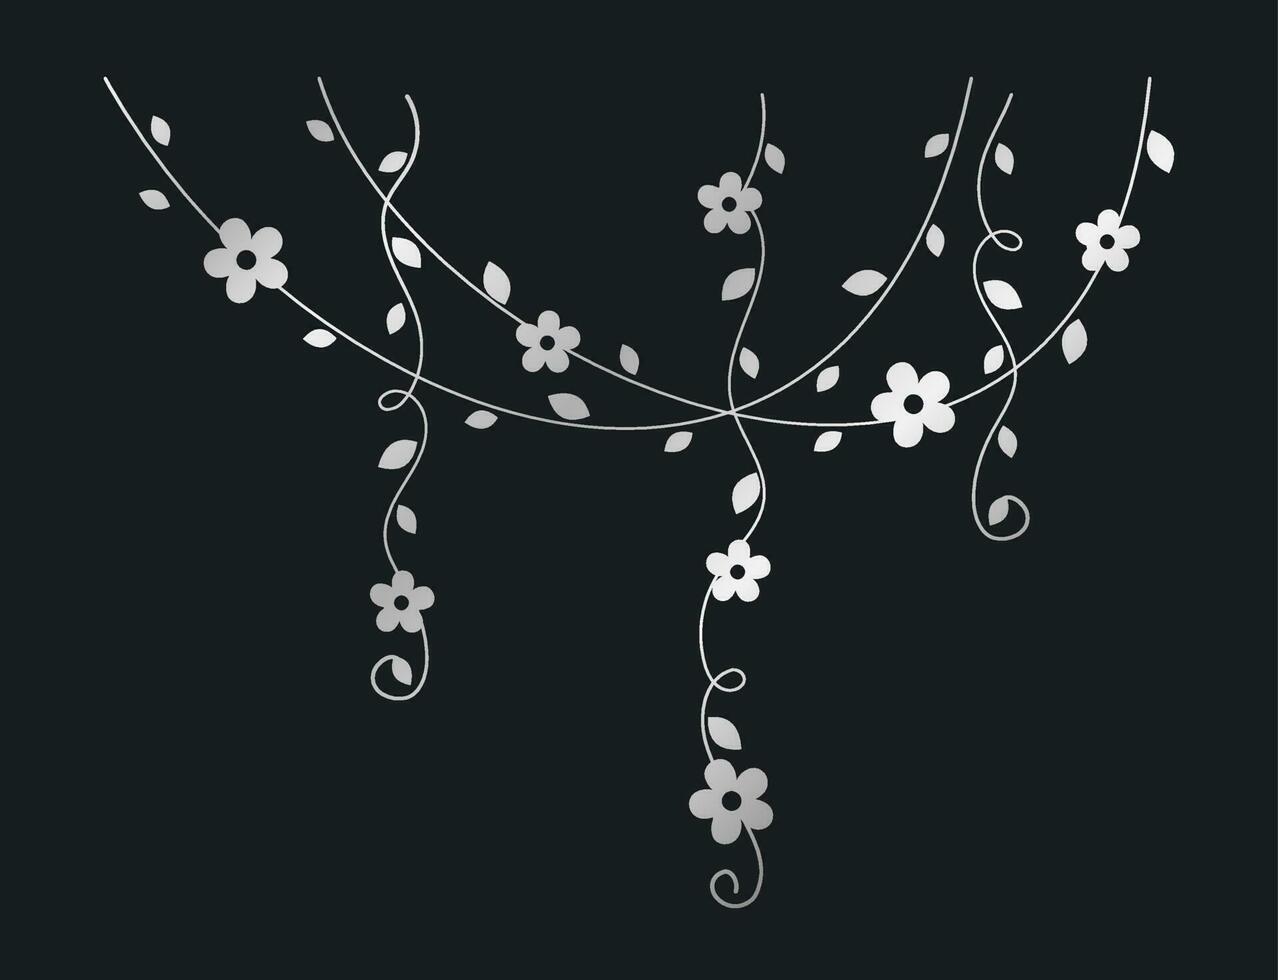 Silver vines with flowers vector illustration. Simple minimal golden floral botanical curtain design elements for spring.